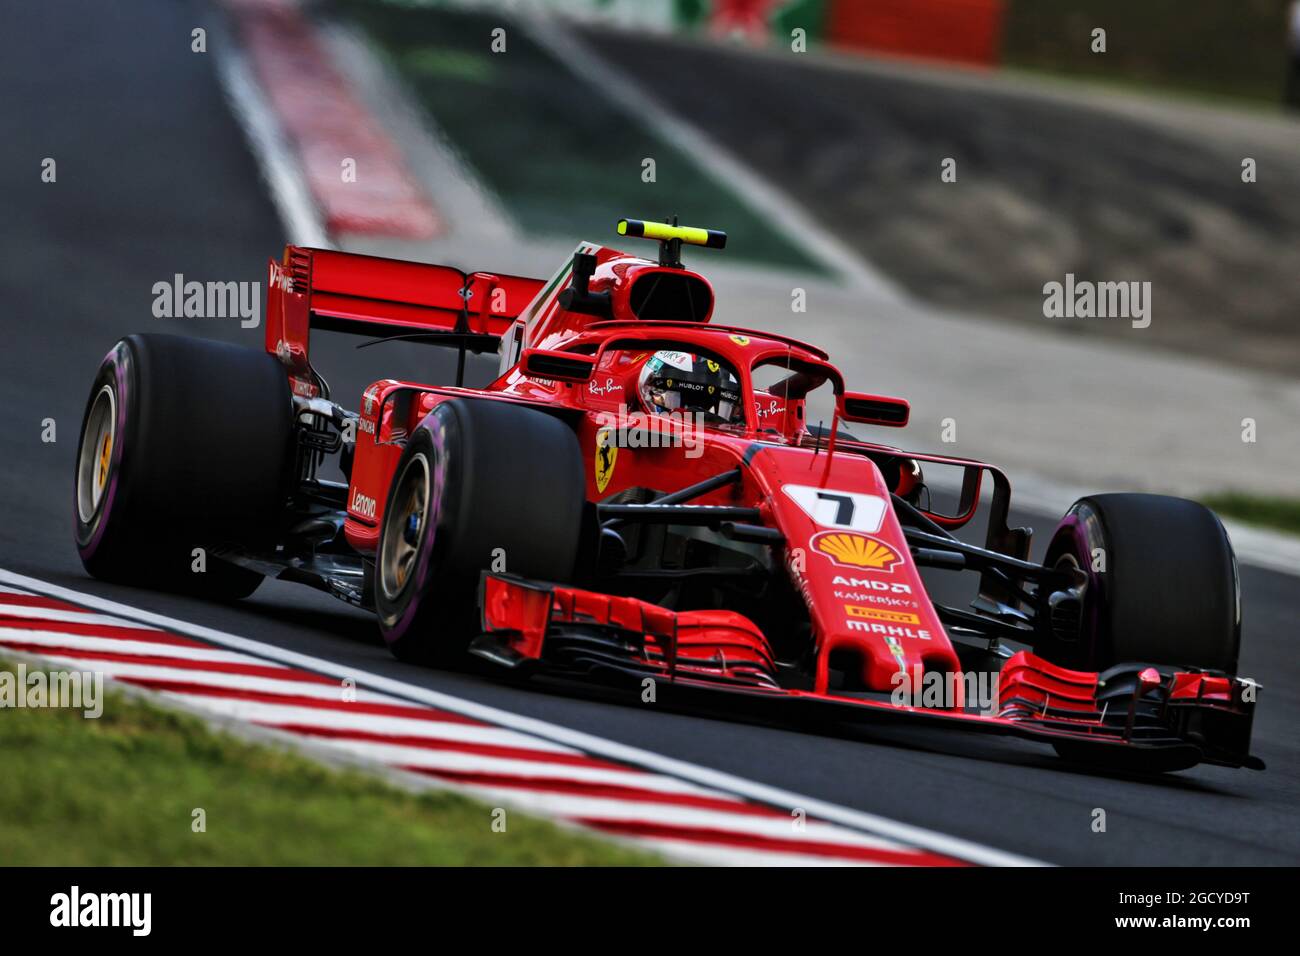 Kimi Raikkonen (FIN) Ferrari SF71H. Gran Premio de Hungría, viernes 27th de julio de 2018. Budapest, Hungría. Foto de stock